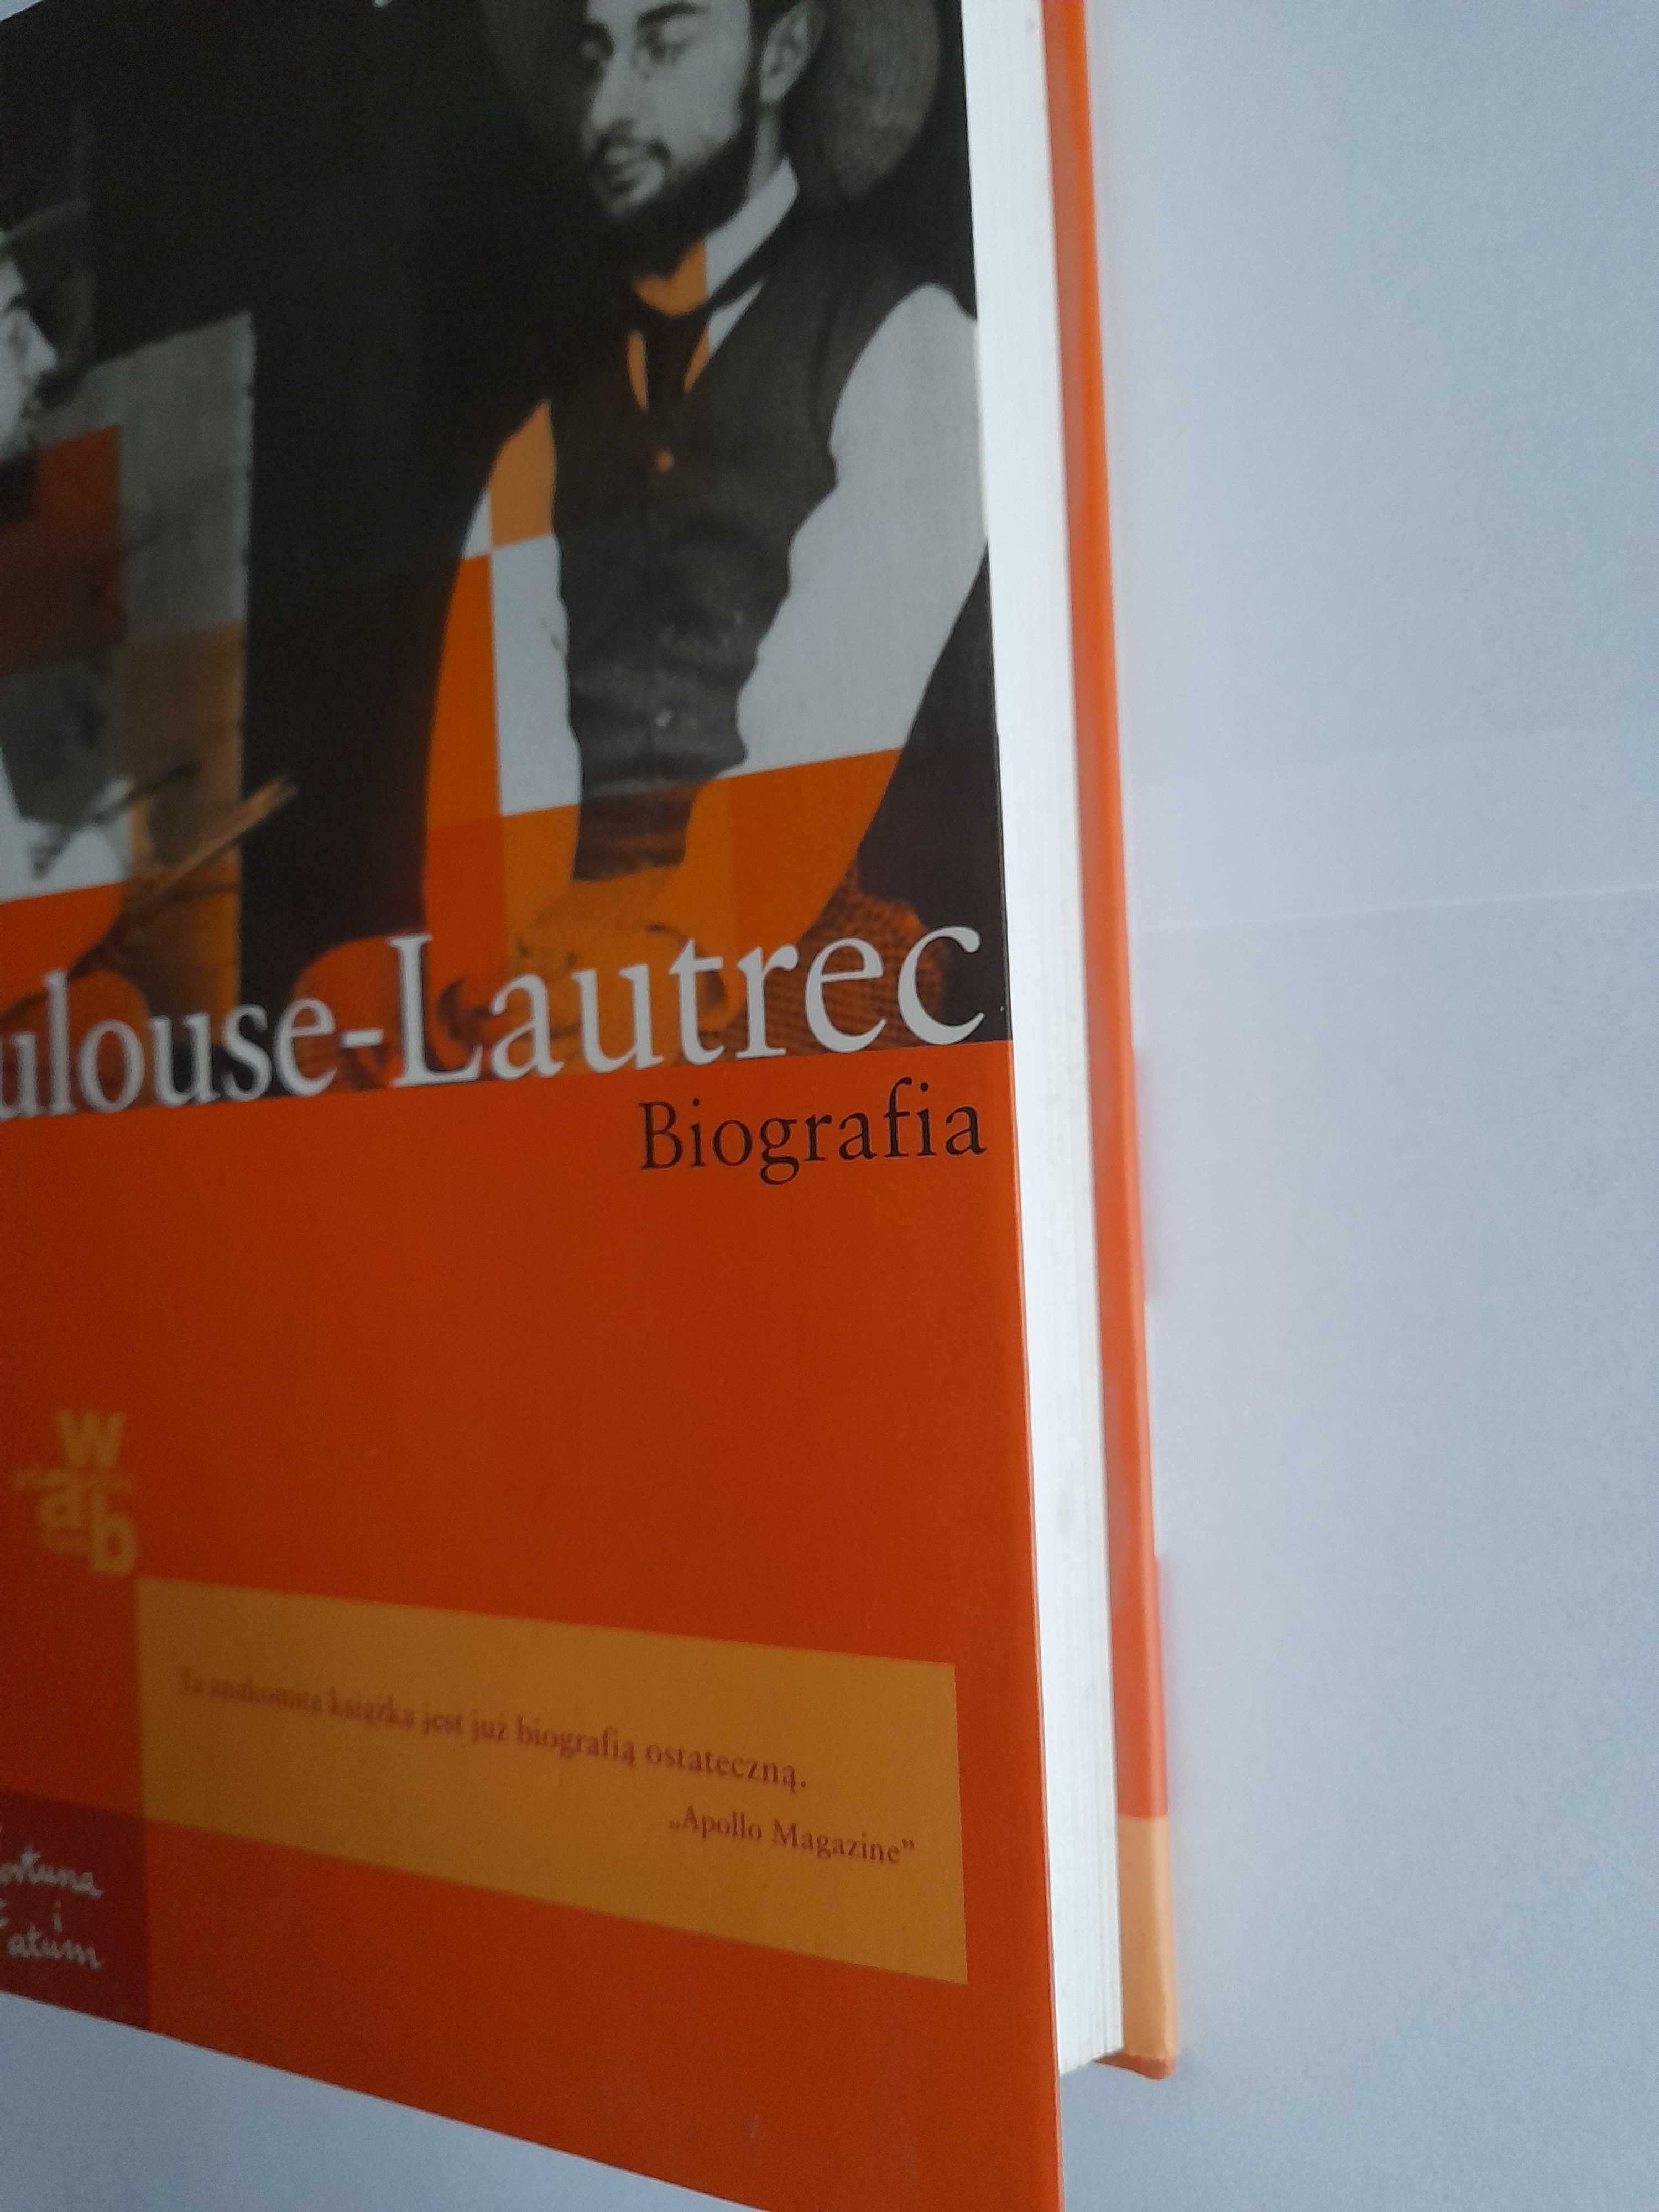 TOULOUSE- LAUTREC Biografia - Julia Frey